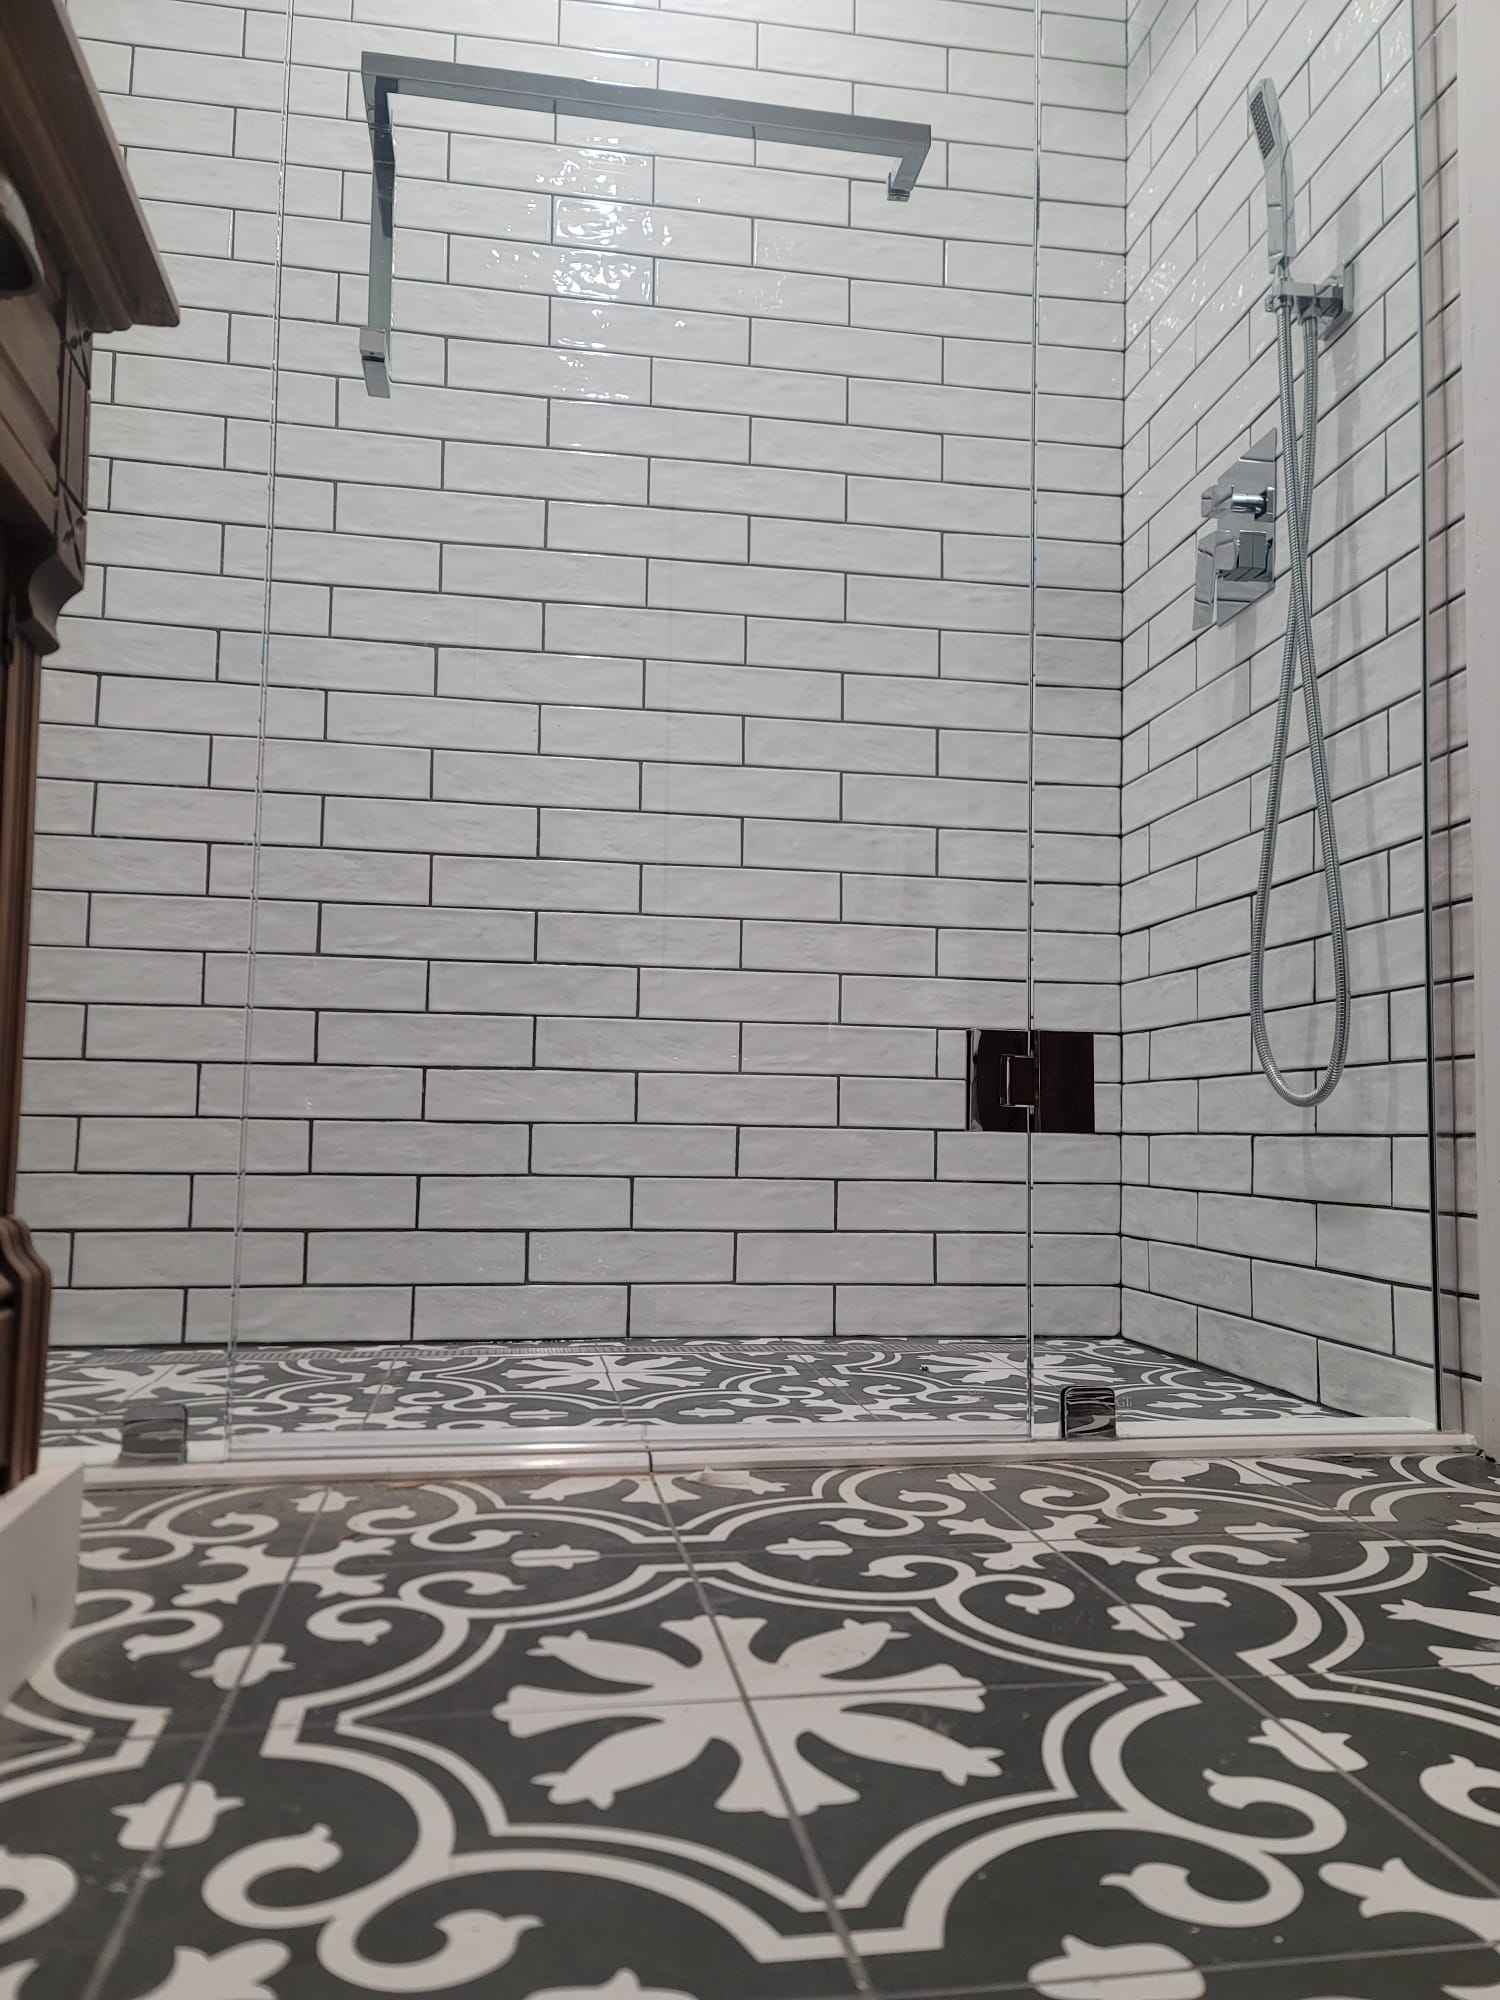 Tiling and bathroom renovation